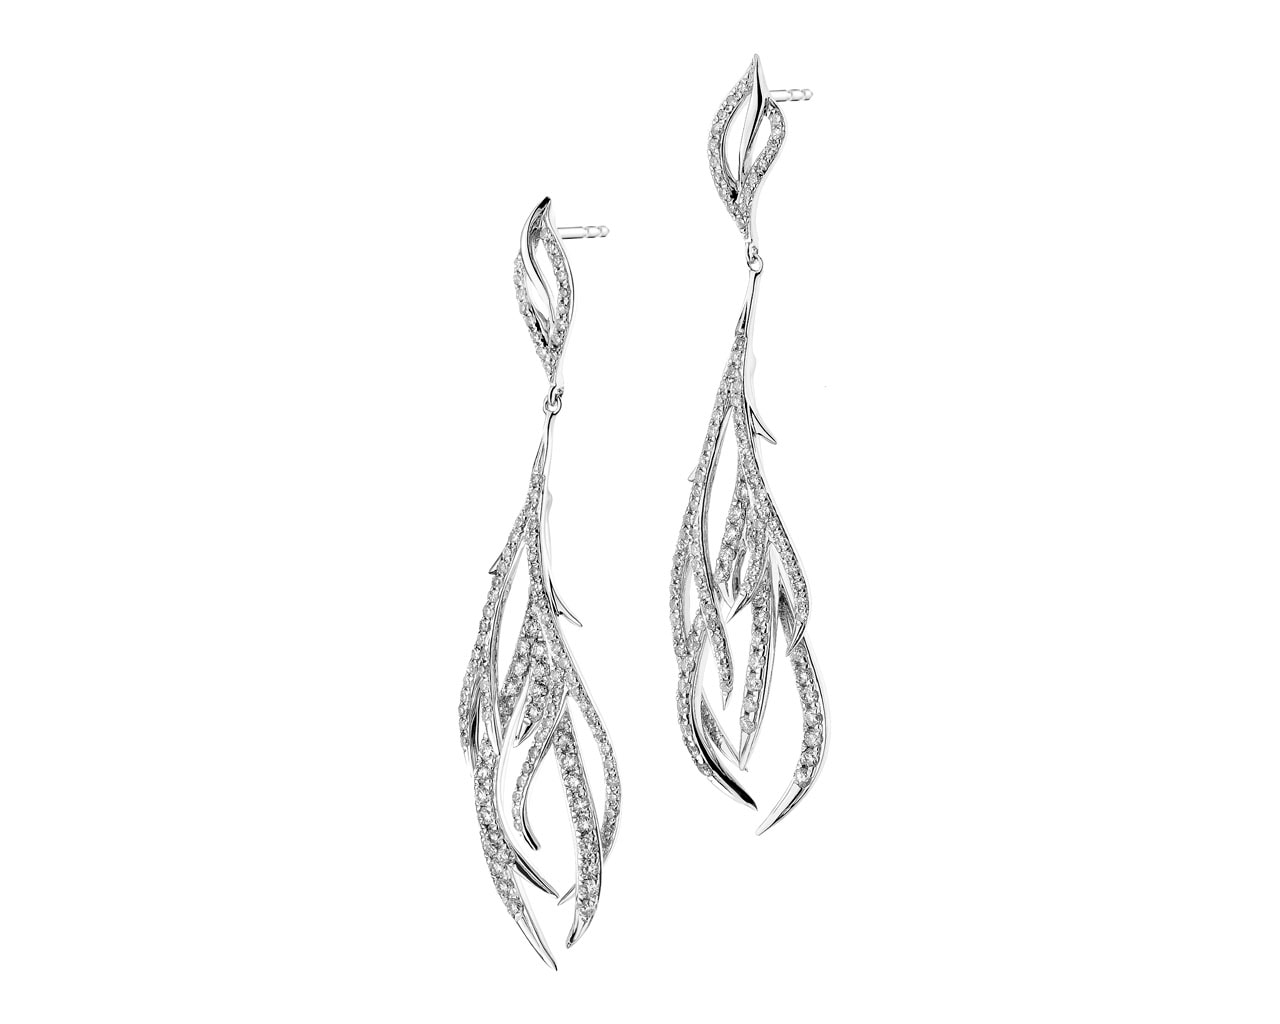 Pair of earrings sketch icon Royalty Free Vector Image